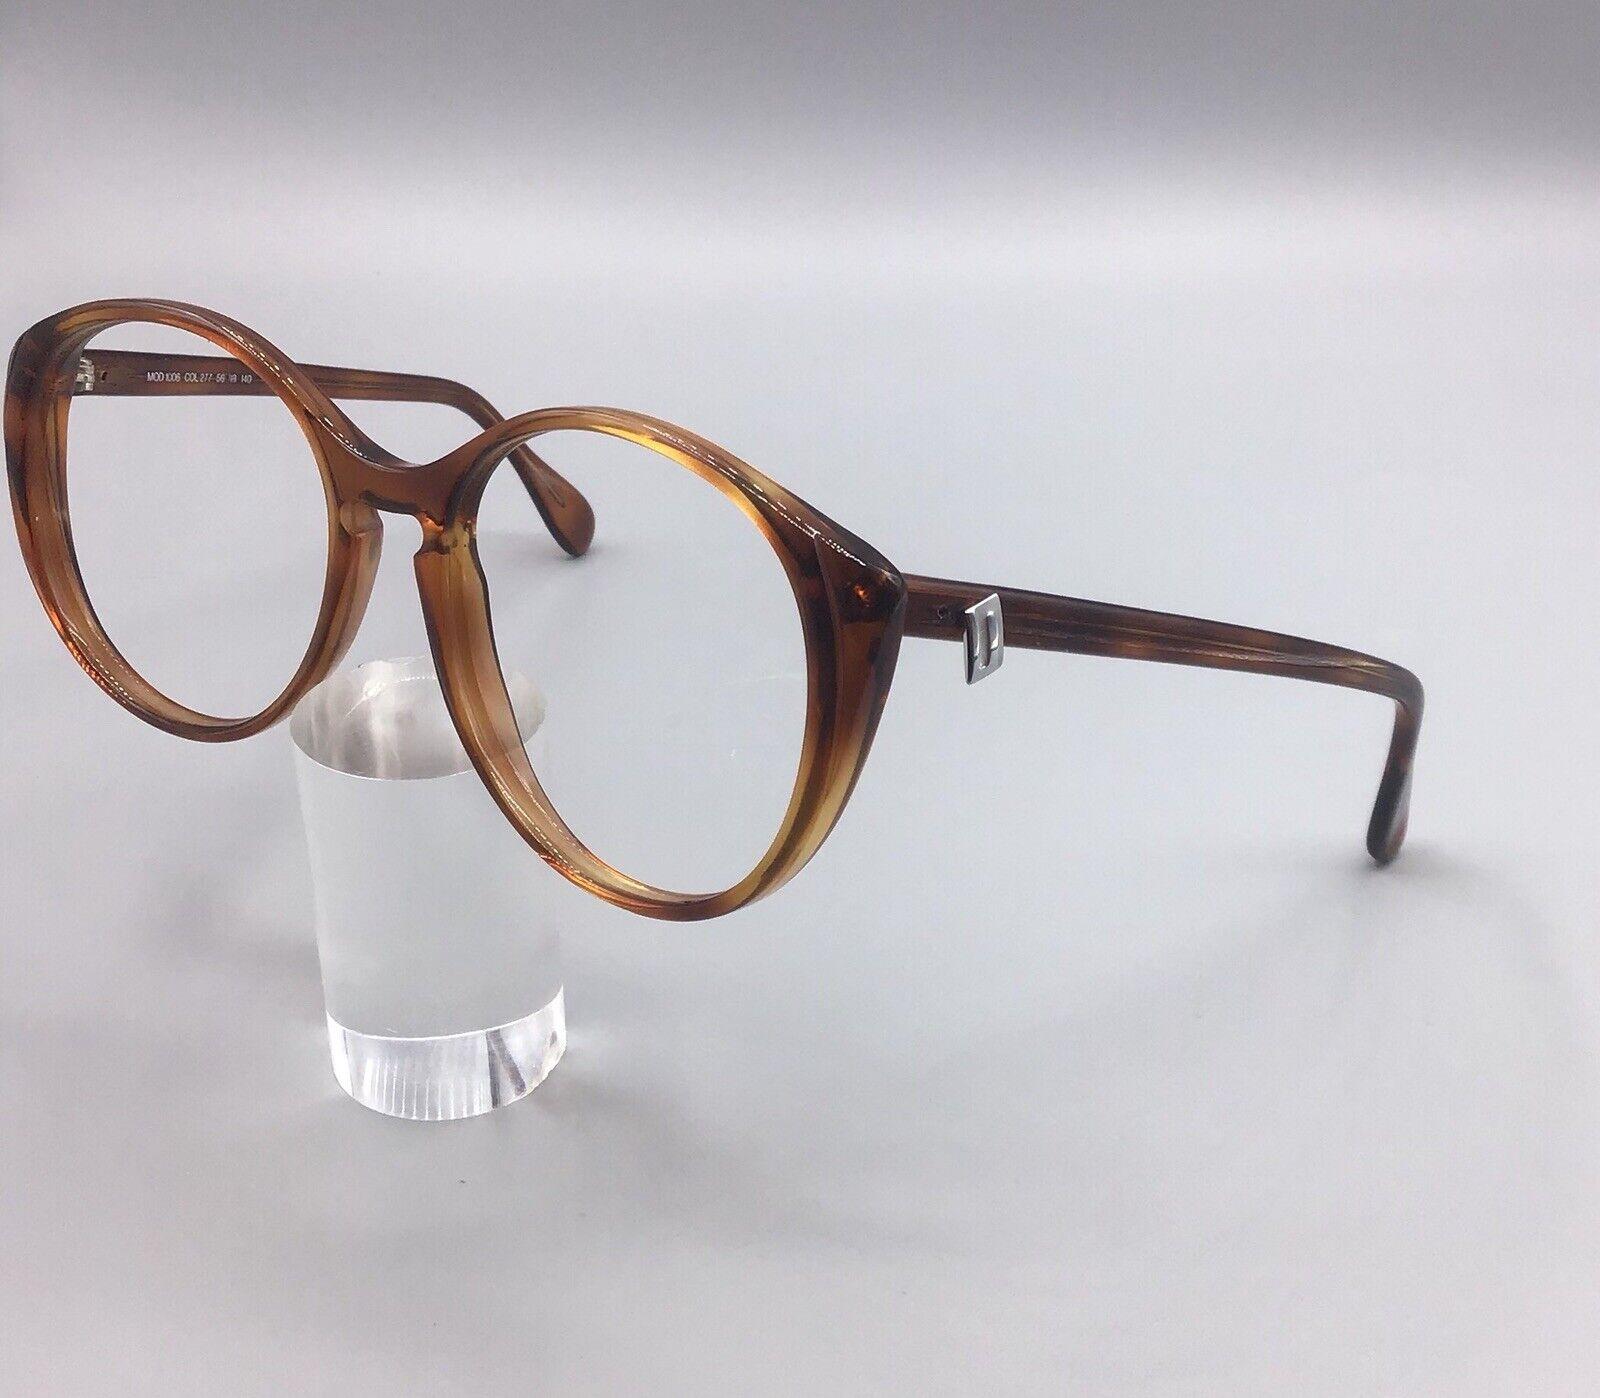 Silhouette Eyewear Glasses Occhiale Vintage Brillen Austria frame Model 1006 colore 277